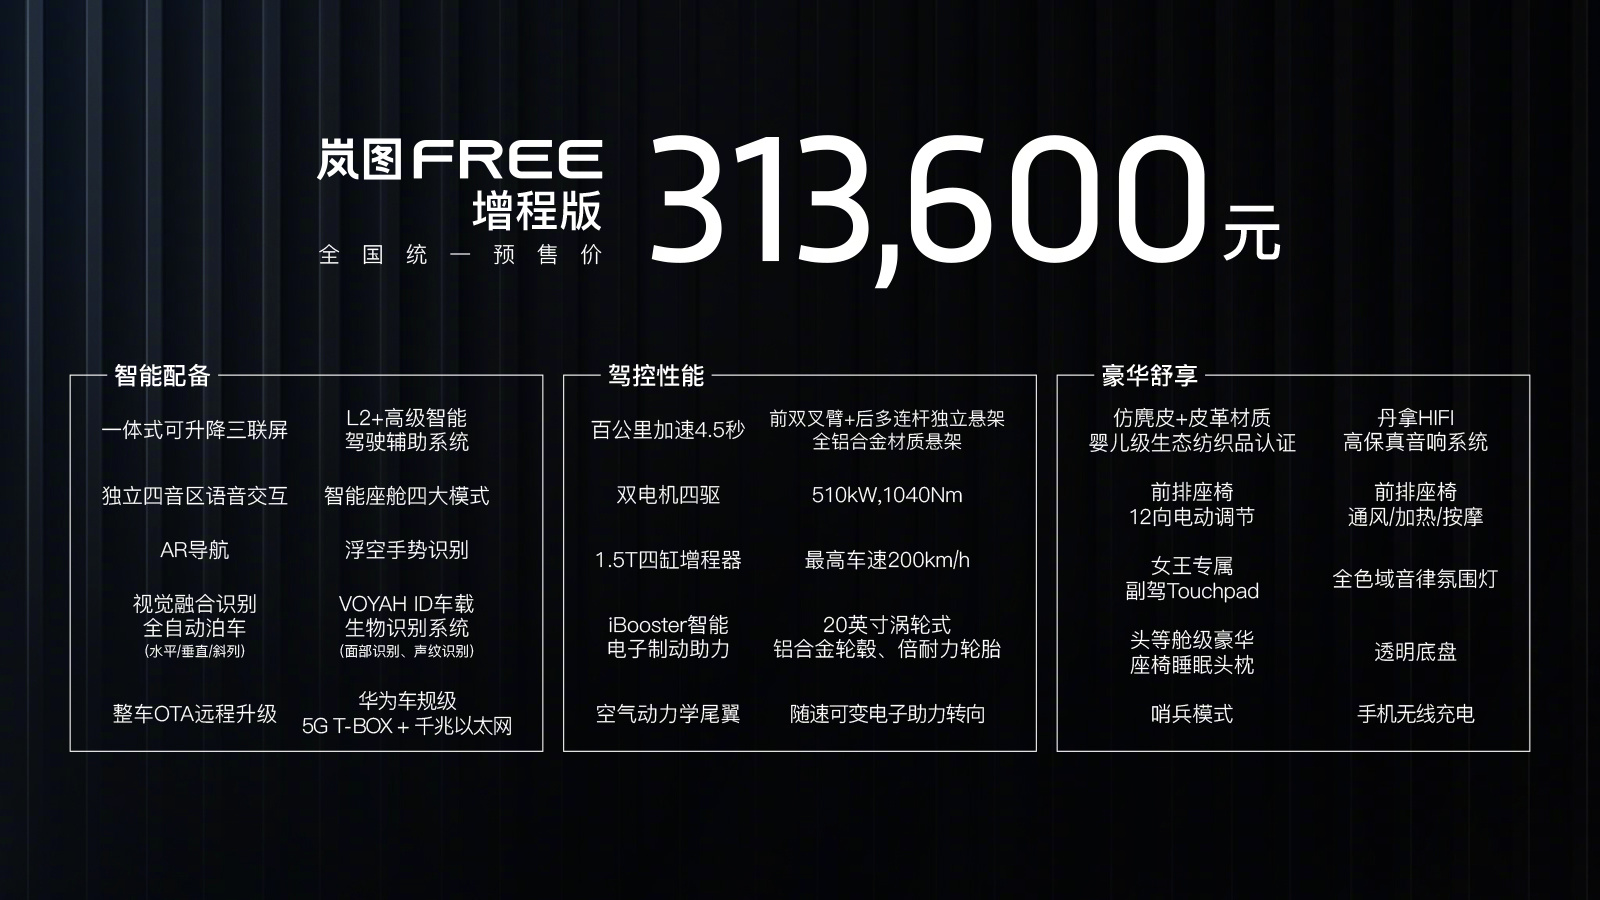 (Extended-range version pre-sale price is 313,600 RMB)